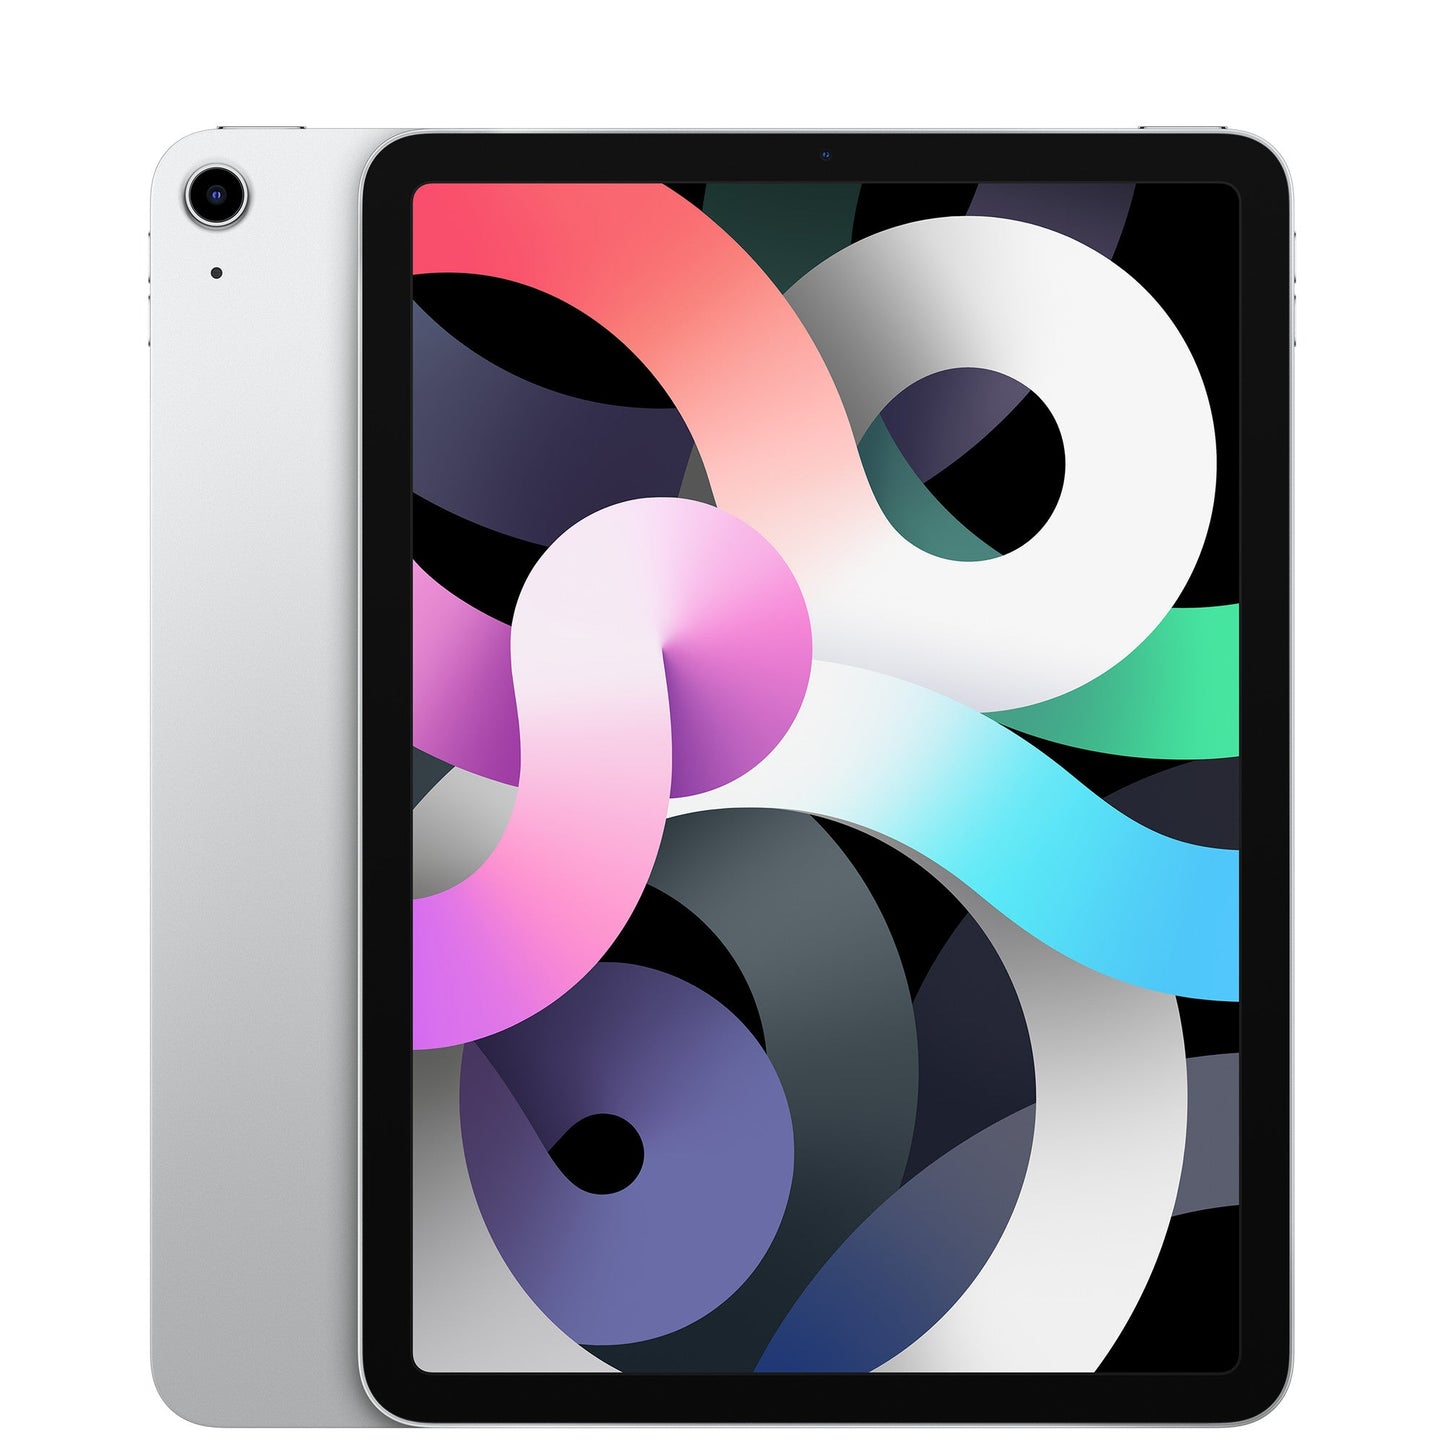 iPad Air 4th Gen 64GB - Silver (WiFi)